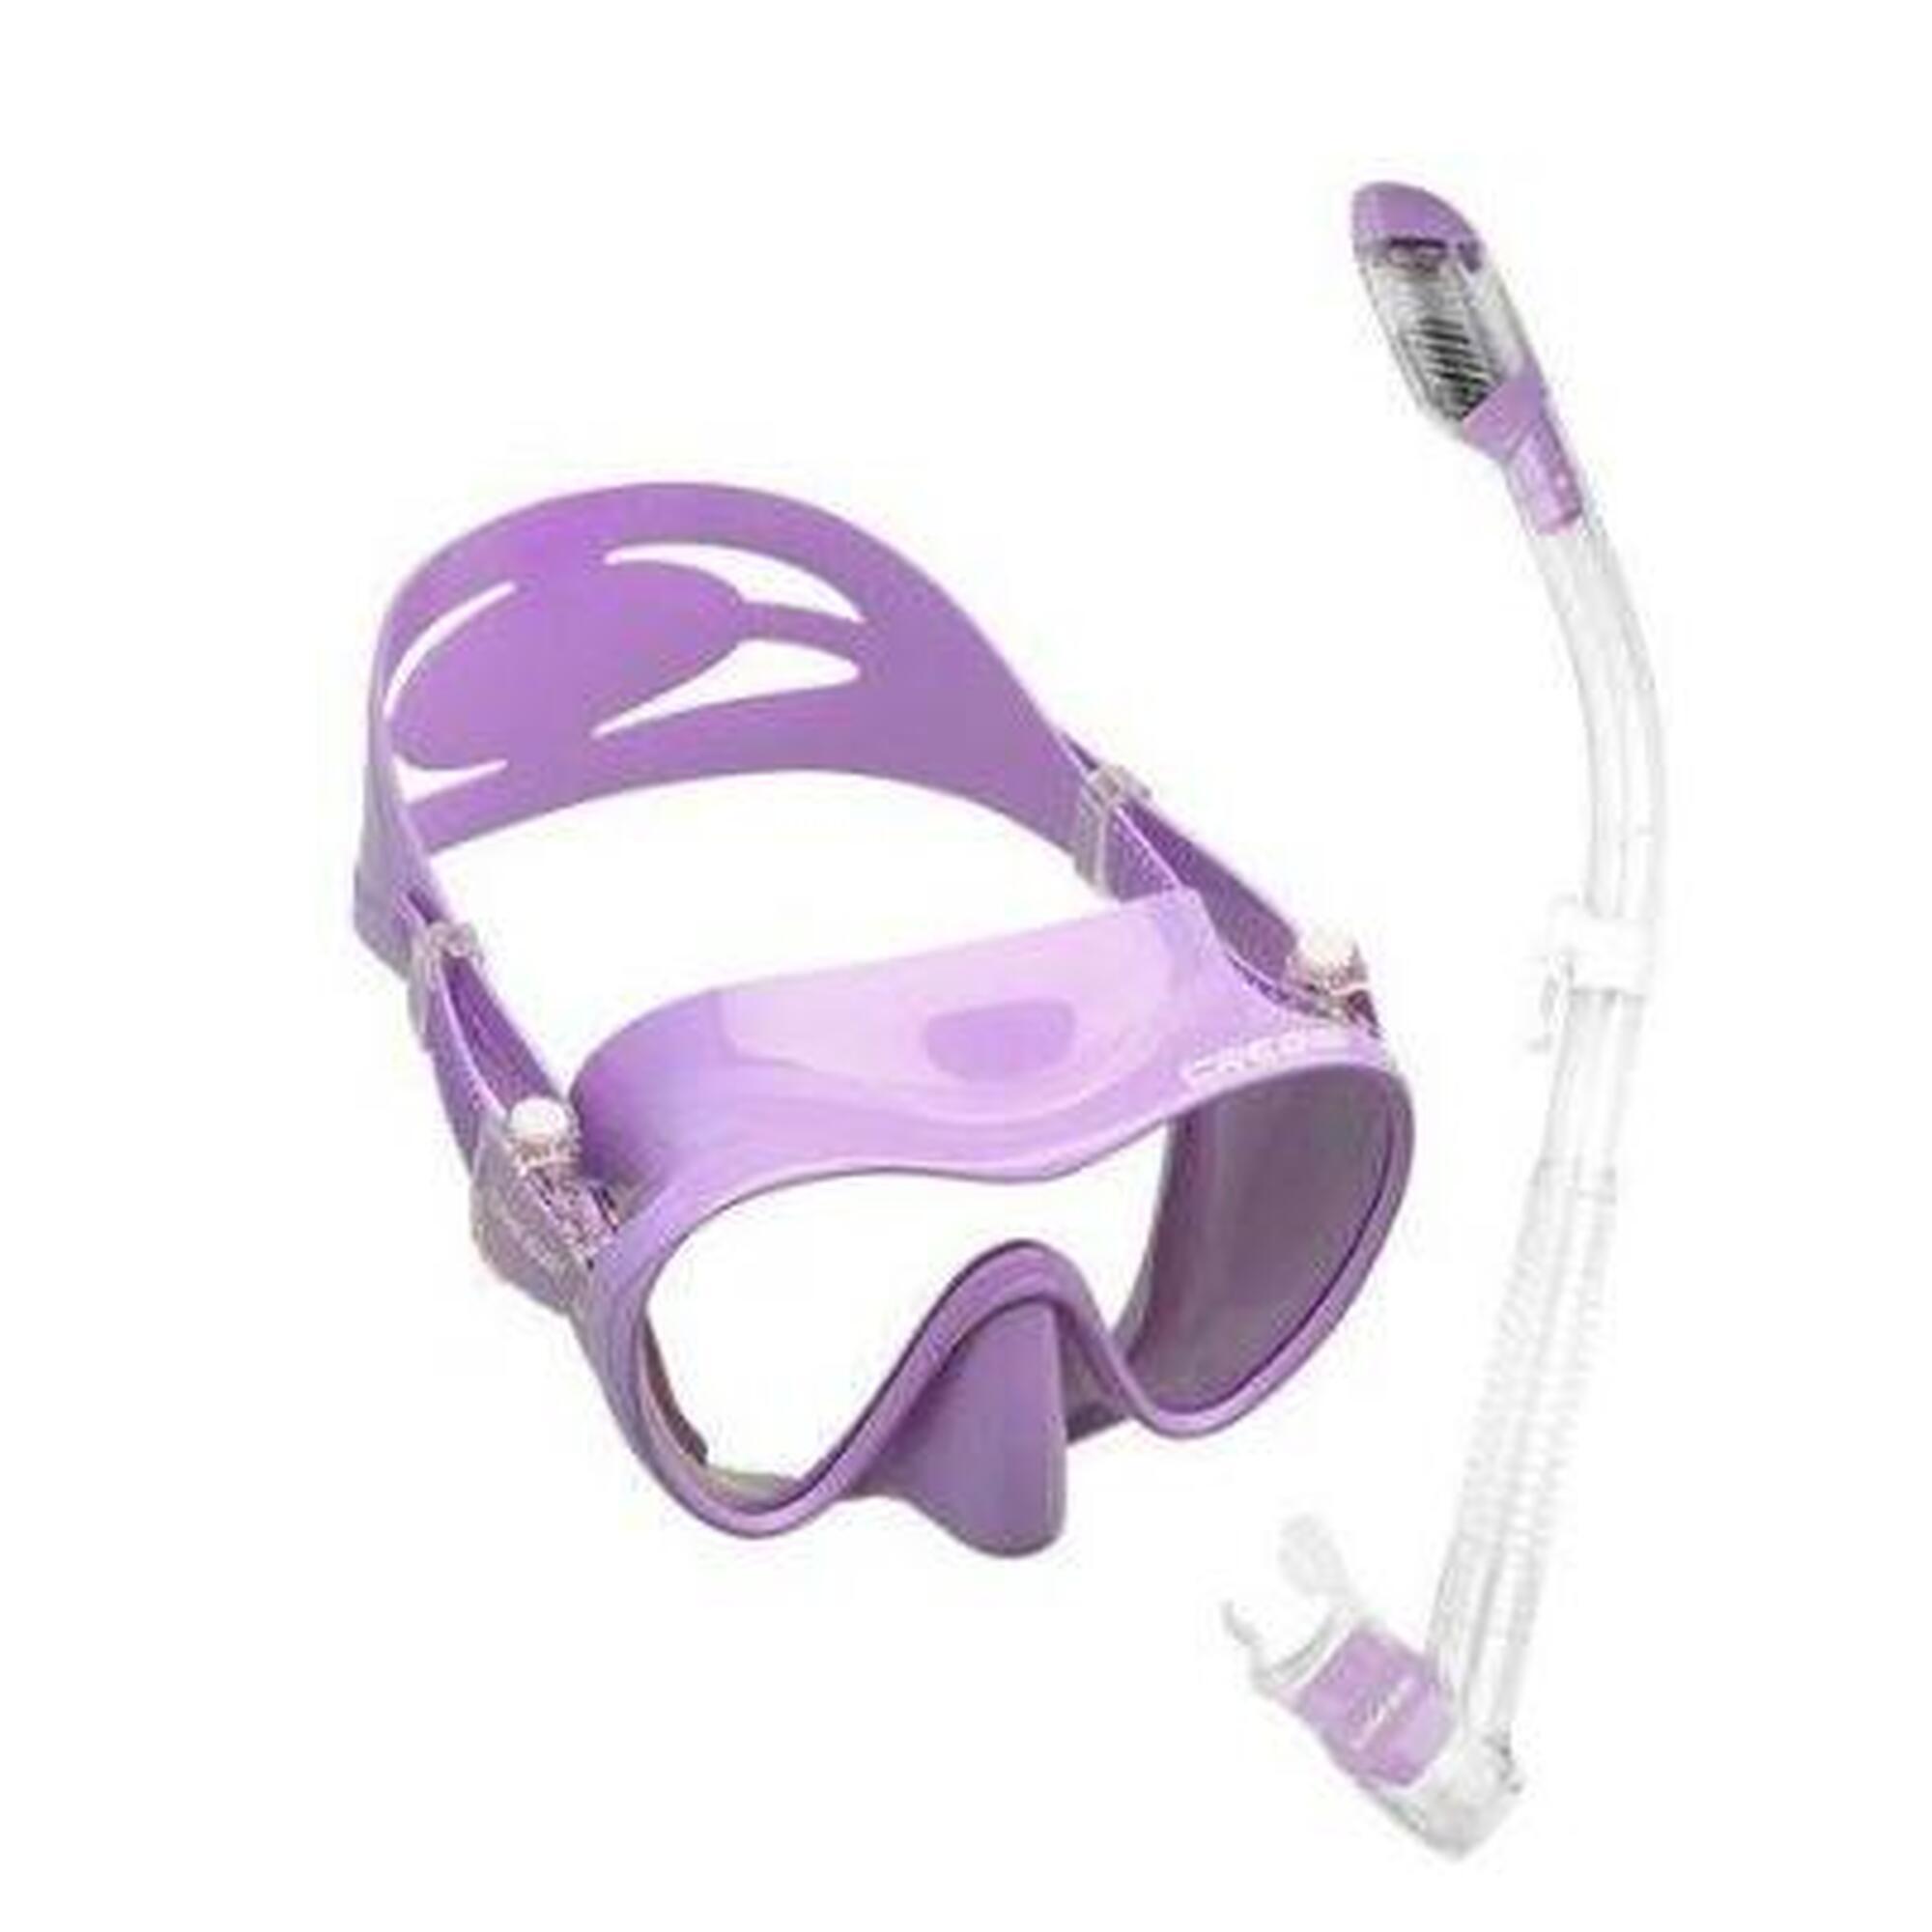 F1 Frameless 面鏡 + Dry 呼吸管組合 - 紫色